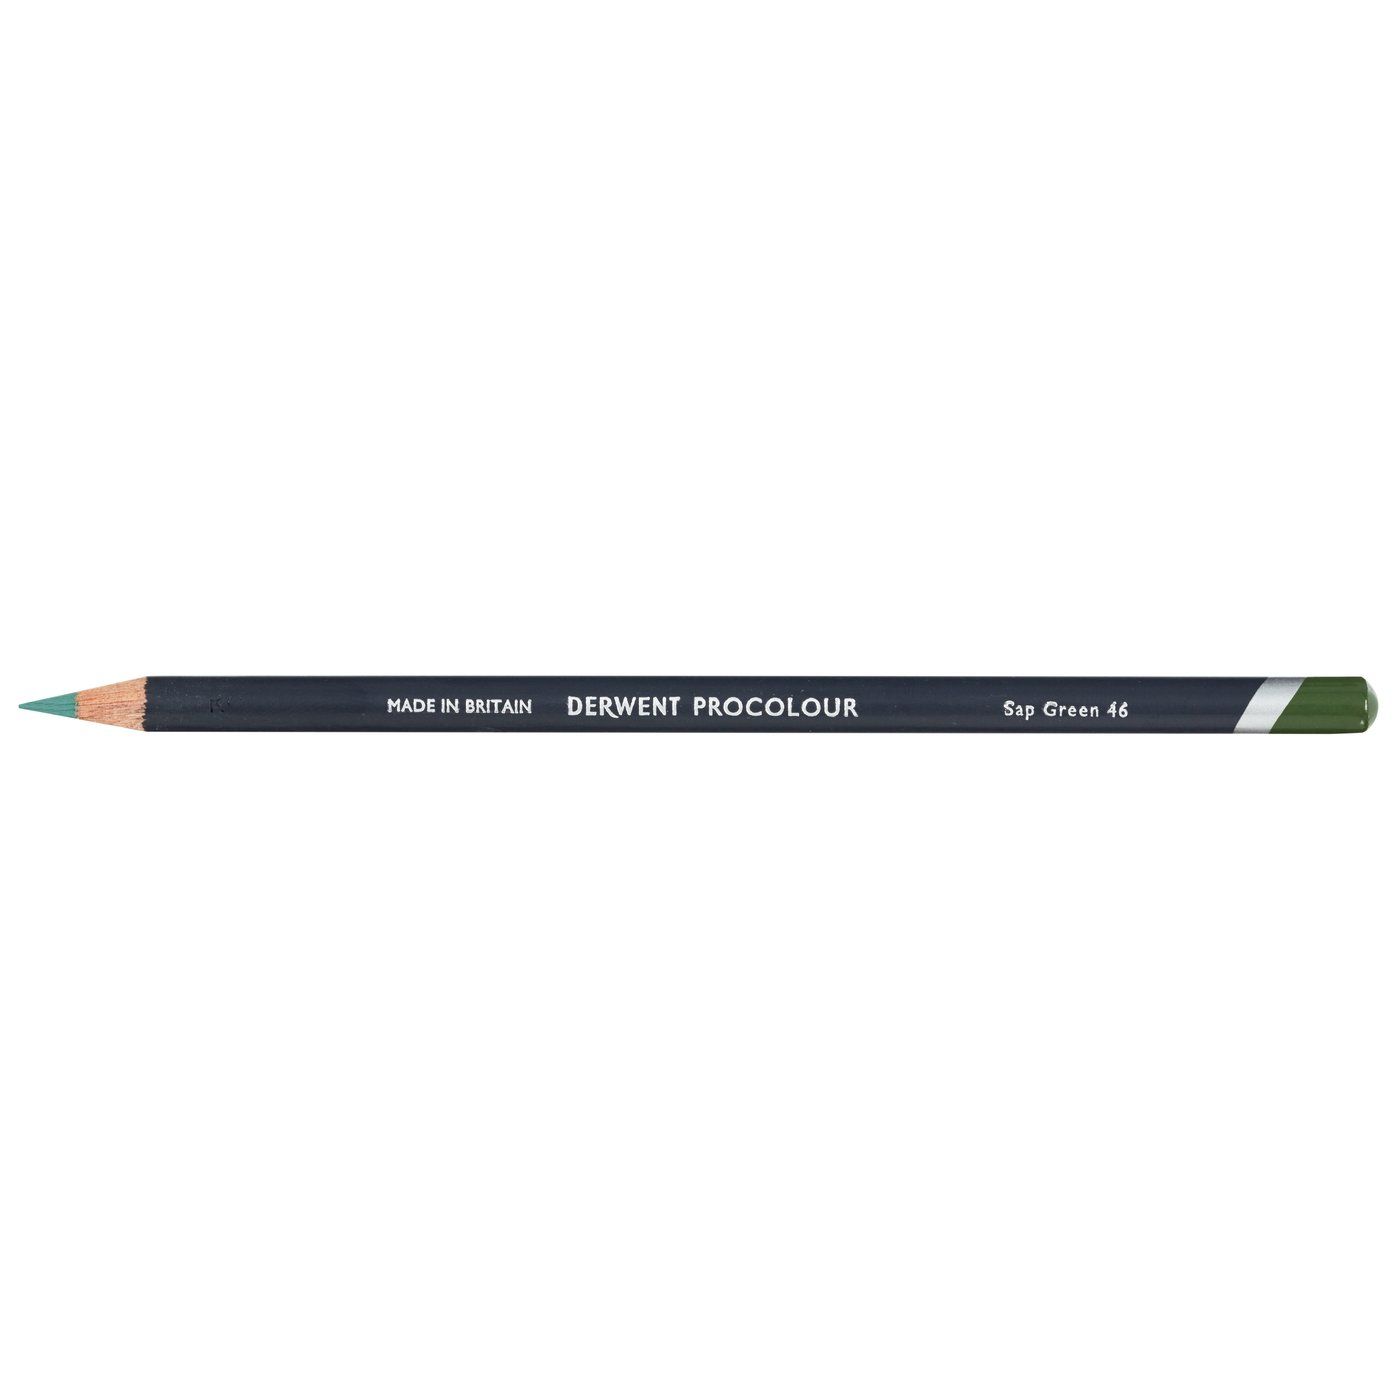 Derwent Procolour Pencil - 46 Sap Green